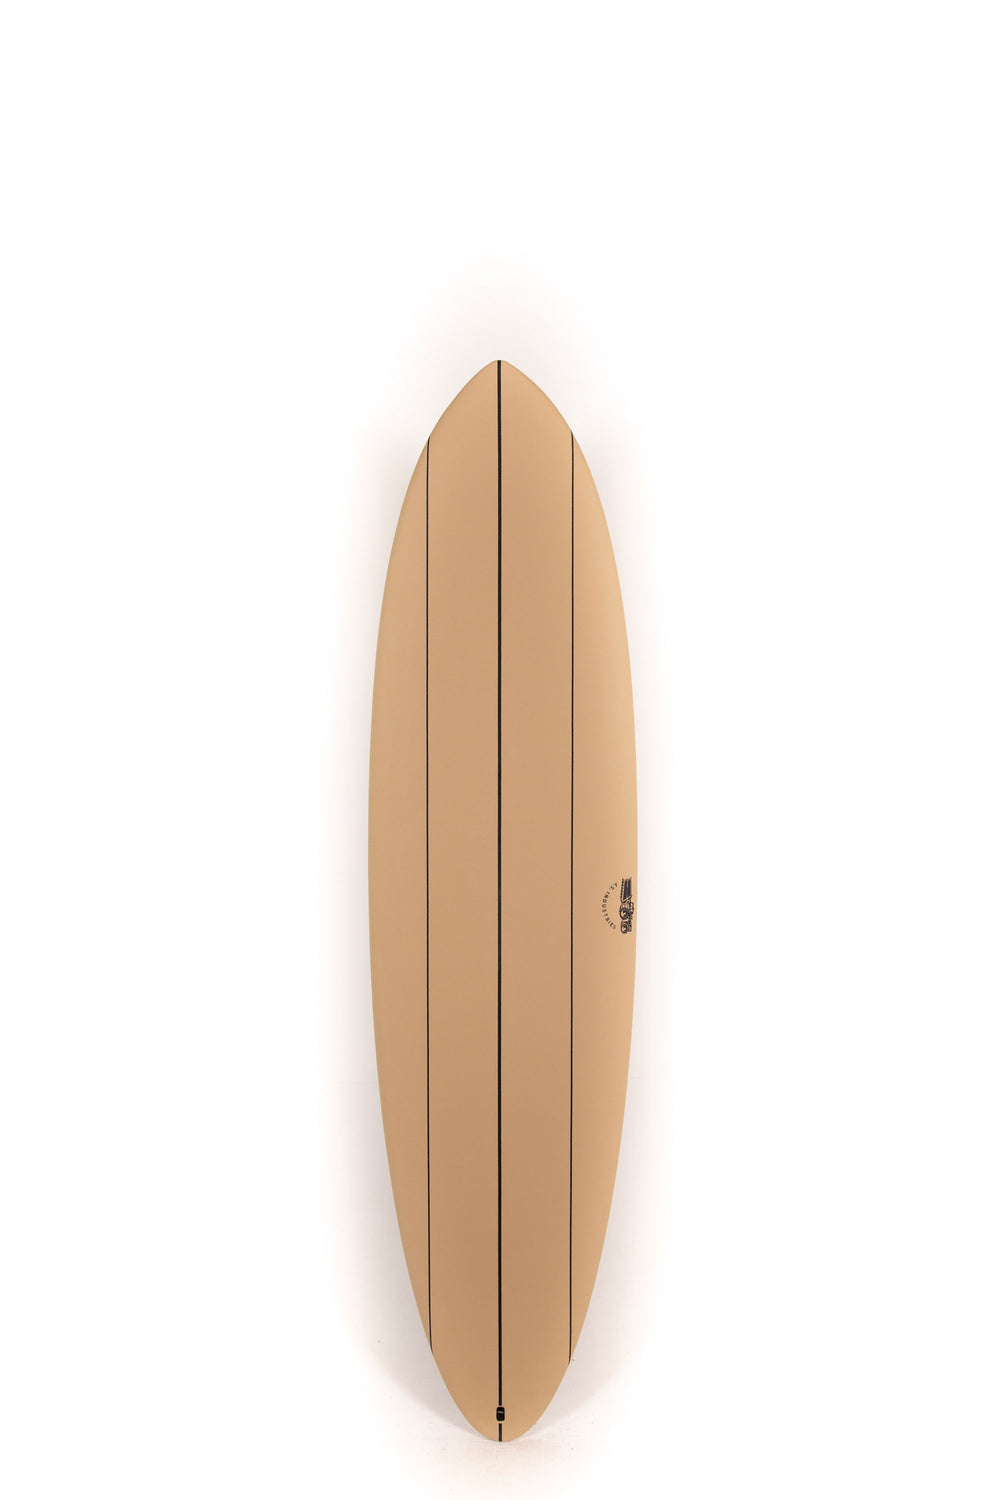 Pukas Surf Shop - JS Surfboards - BIG BARON SOFT - 7'0